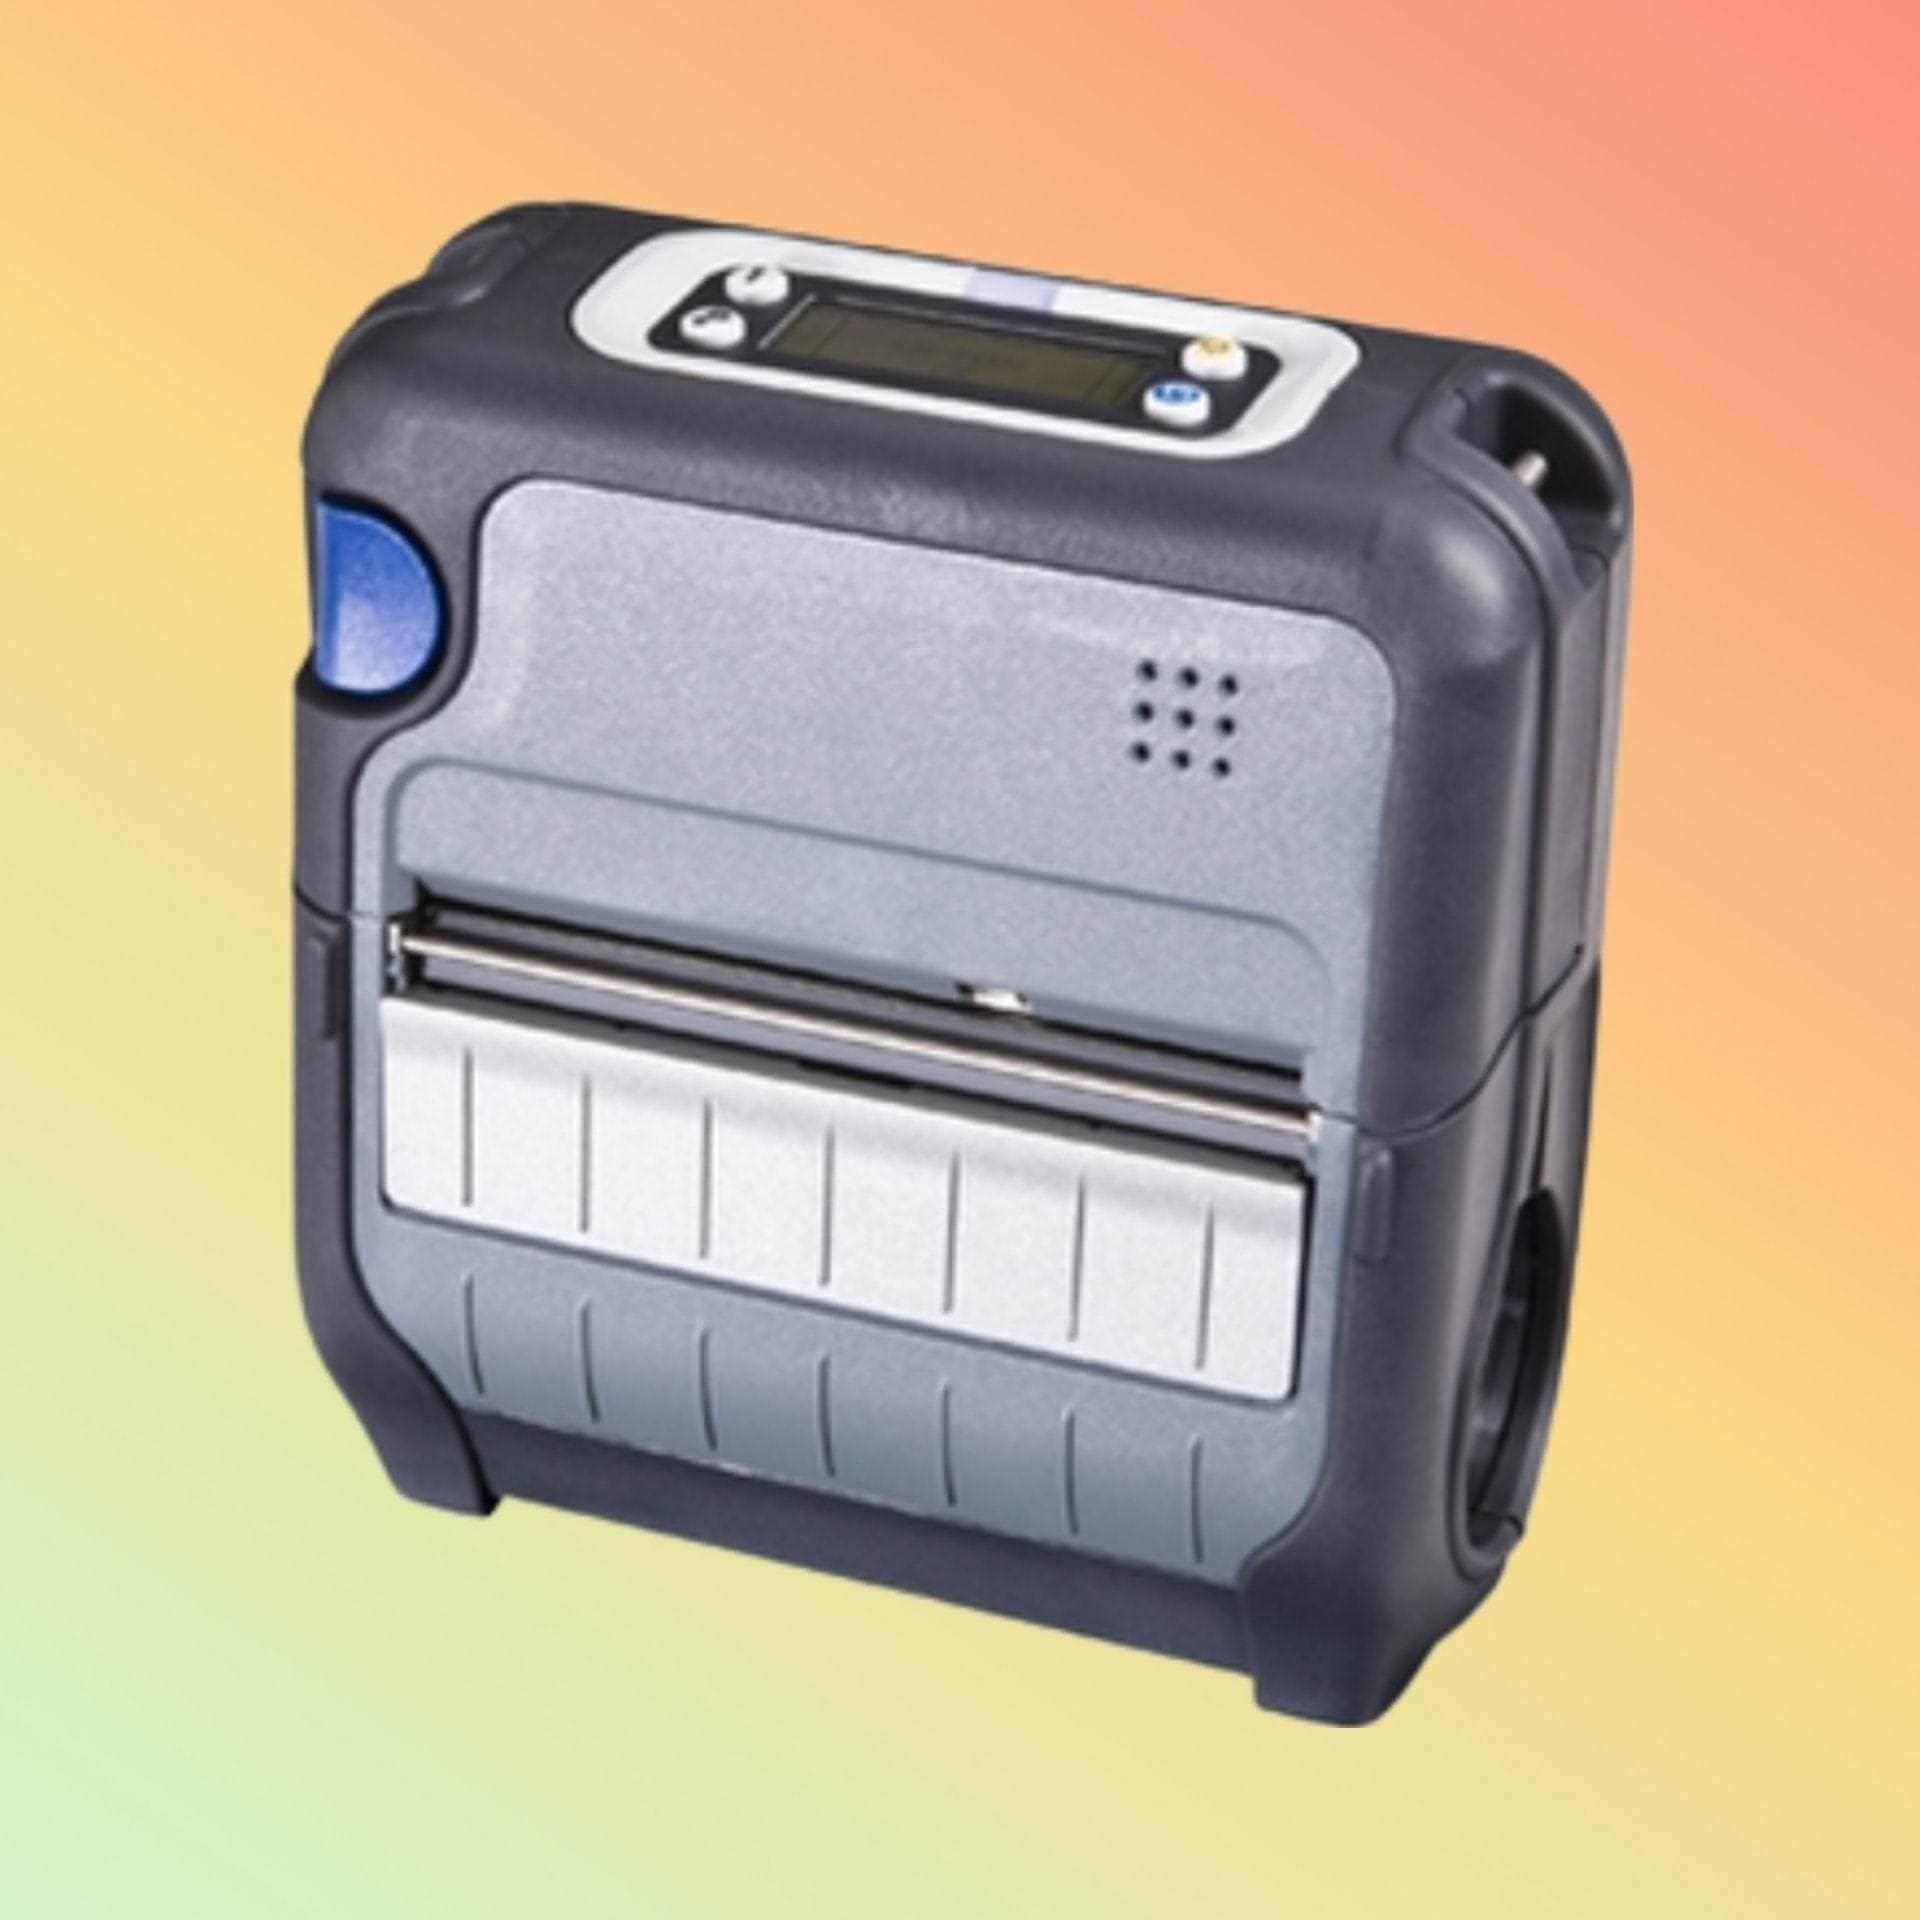 Mobile Printer - Honeywell PB50 - Neotech